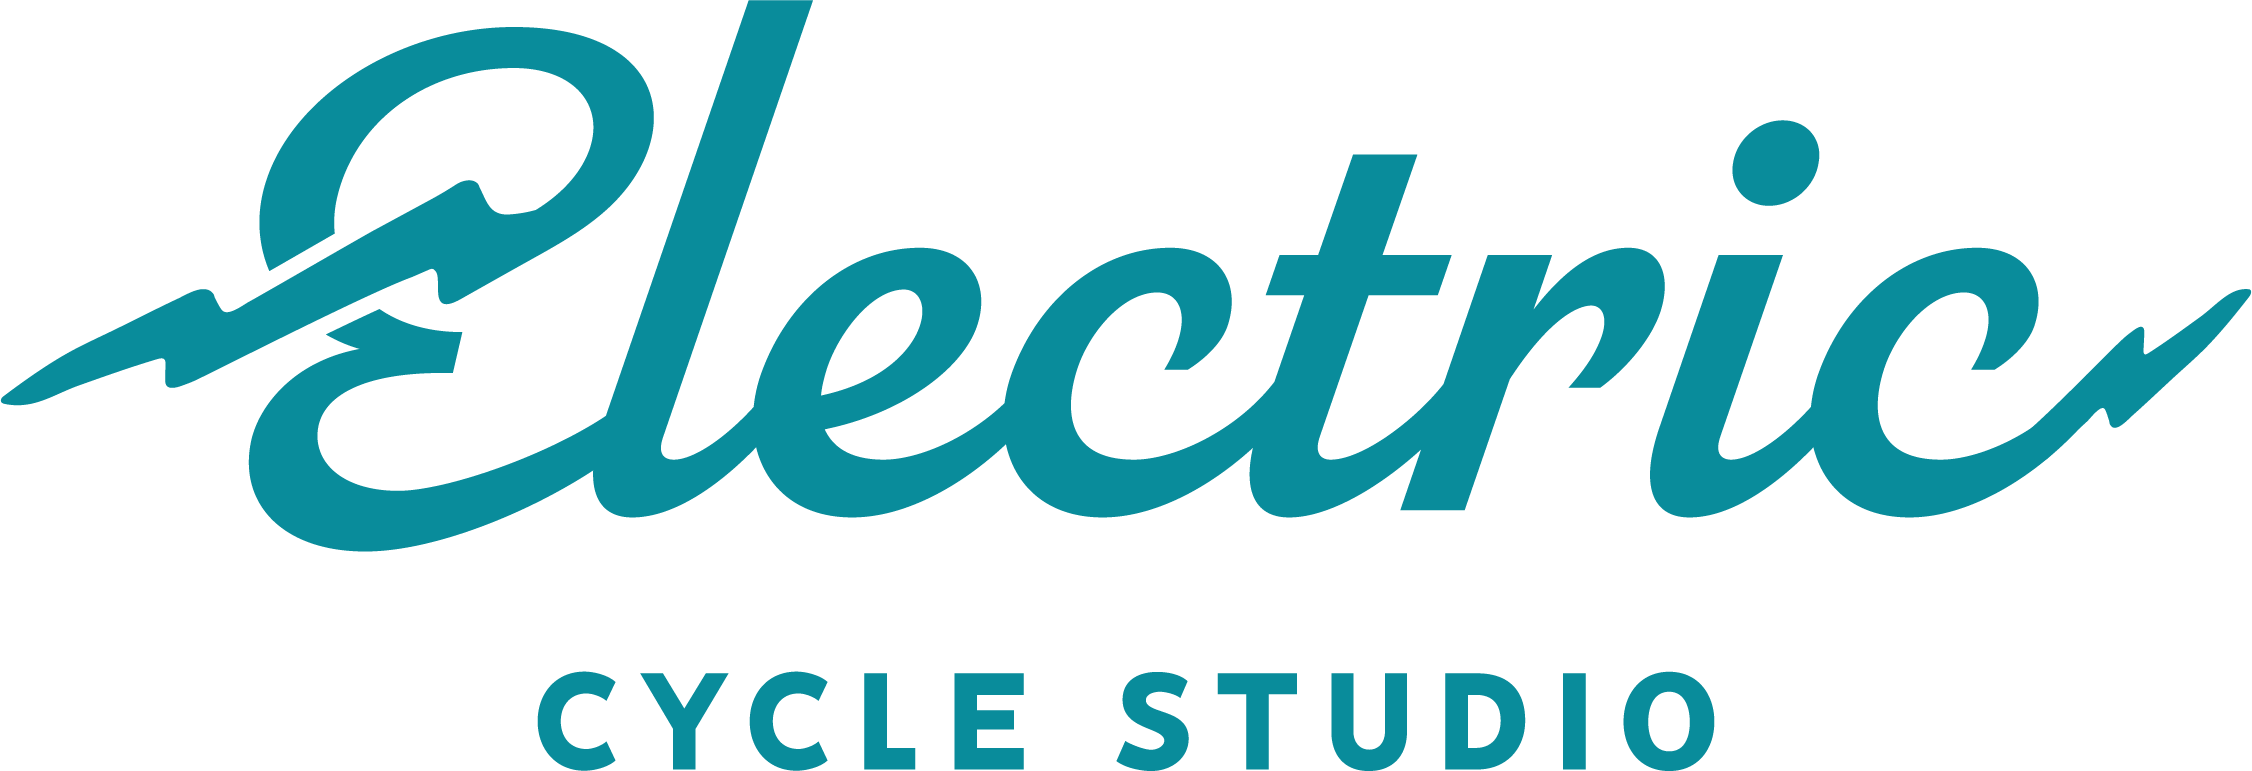 Electric Cycle Studio